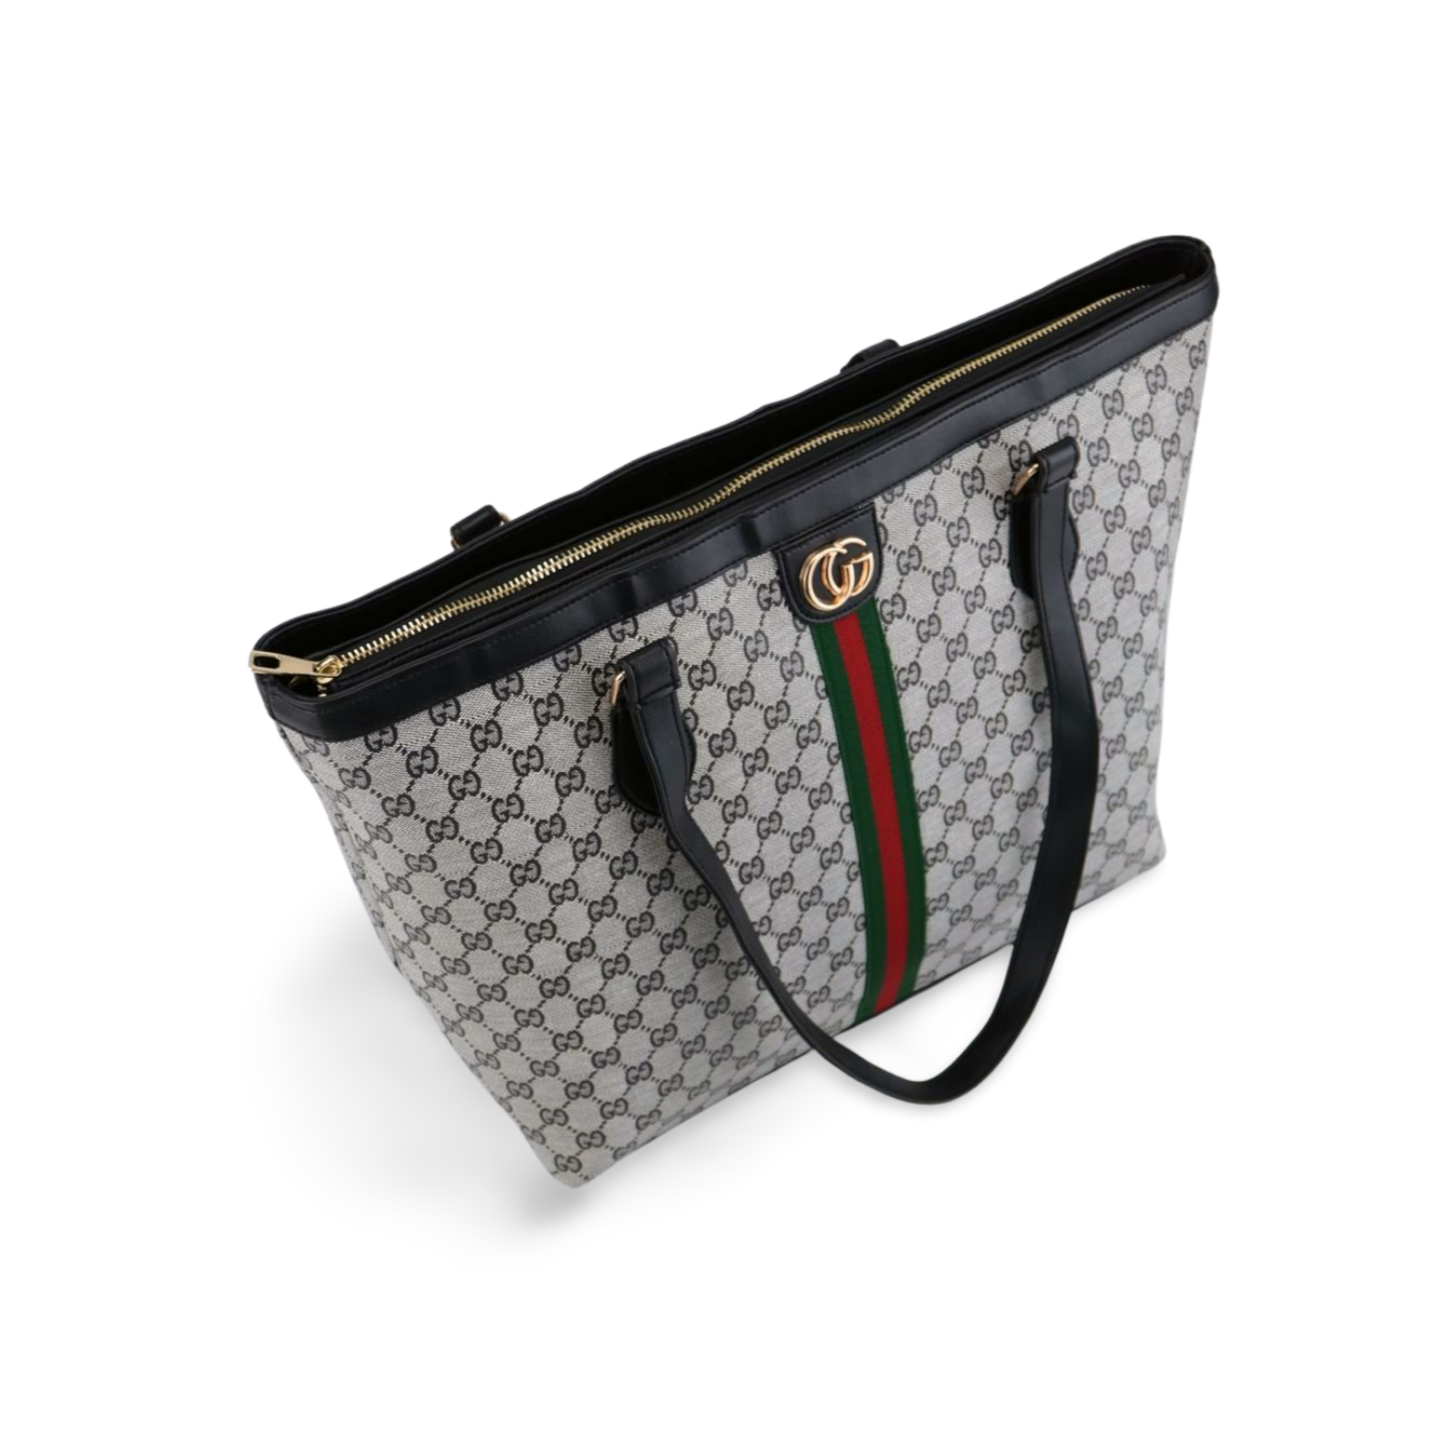 Elegant Tote Bag with Signature Pattern and Classic Stripe Design